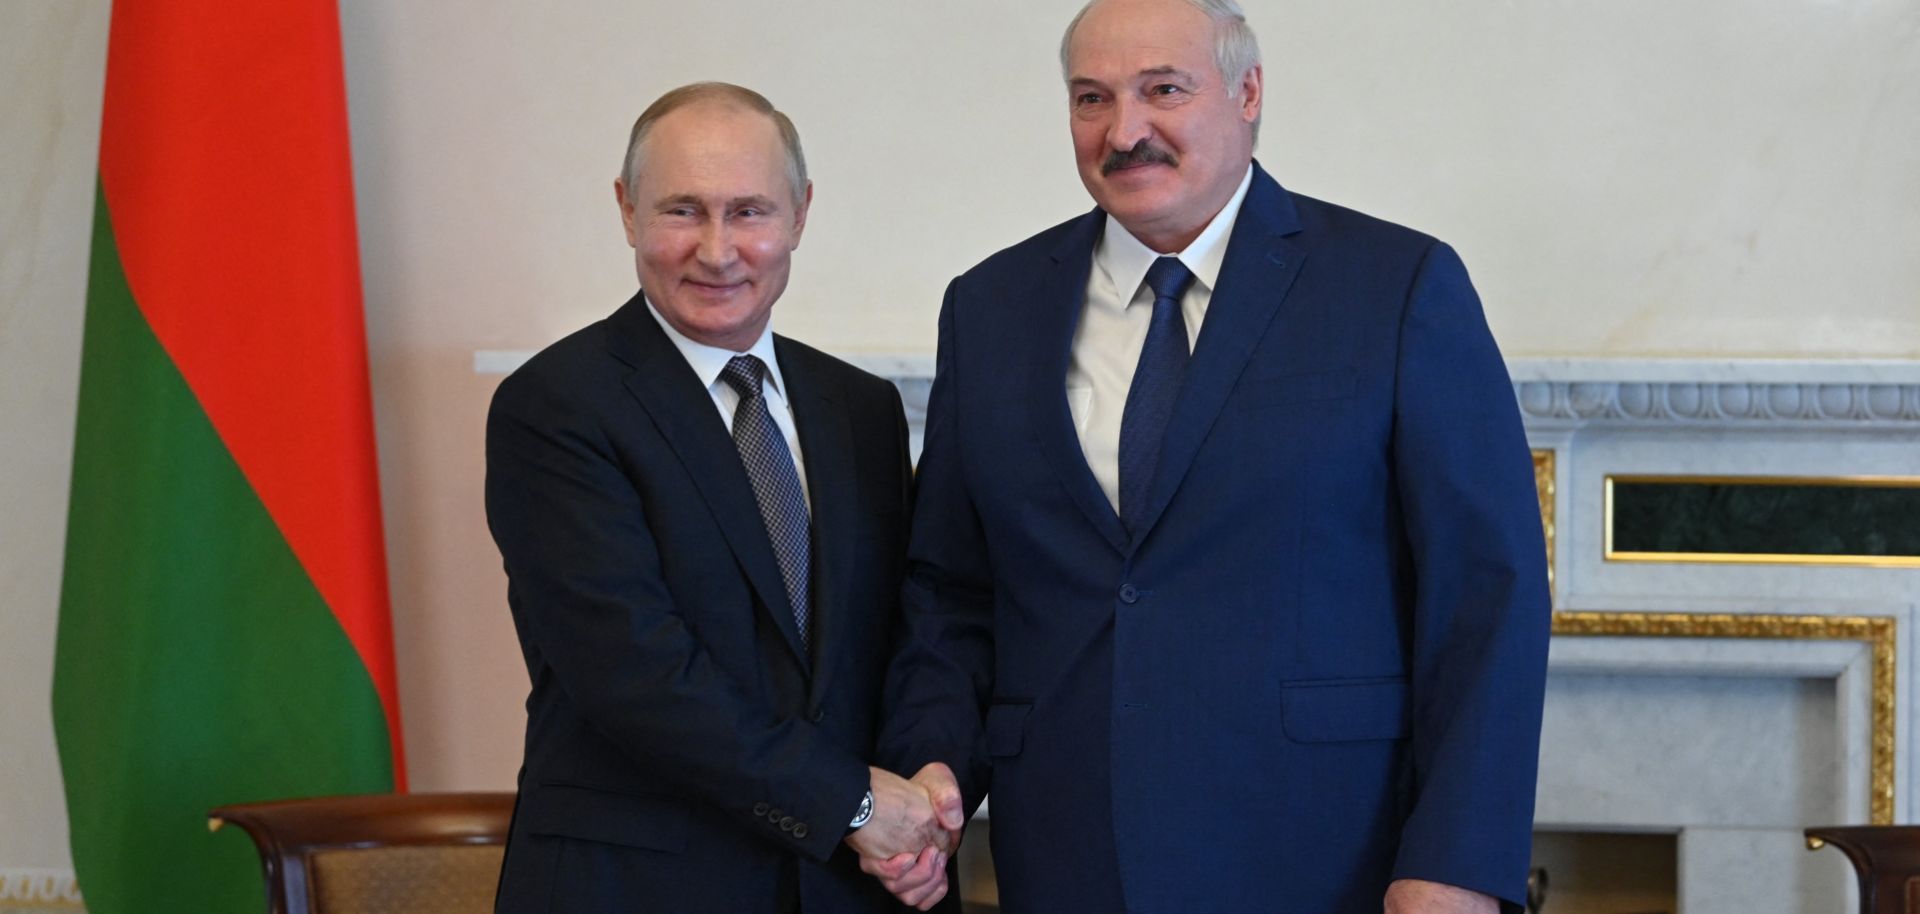 Russian President Vladimir Putin (left) shakes hands with his Belarusian counterpart Alexander Lukashenko in Saint Petersburg, Russia, on July 13, 2021. 